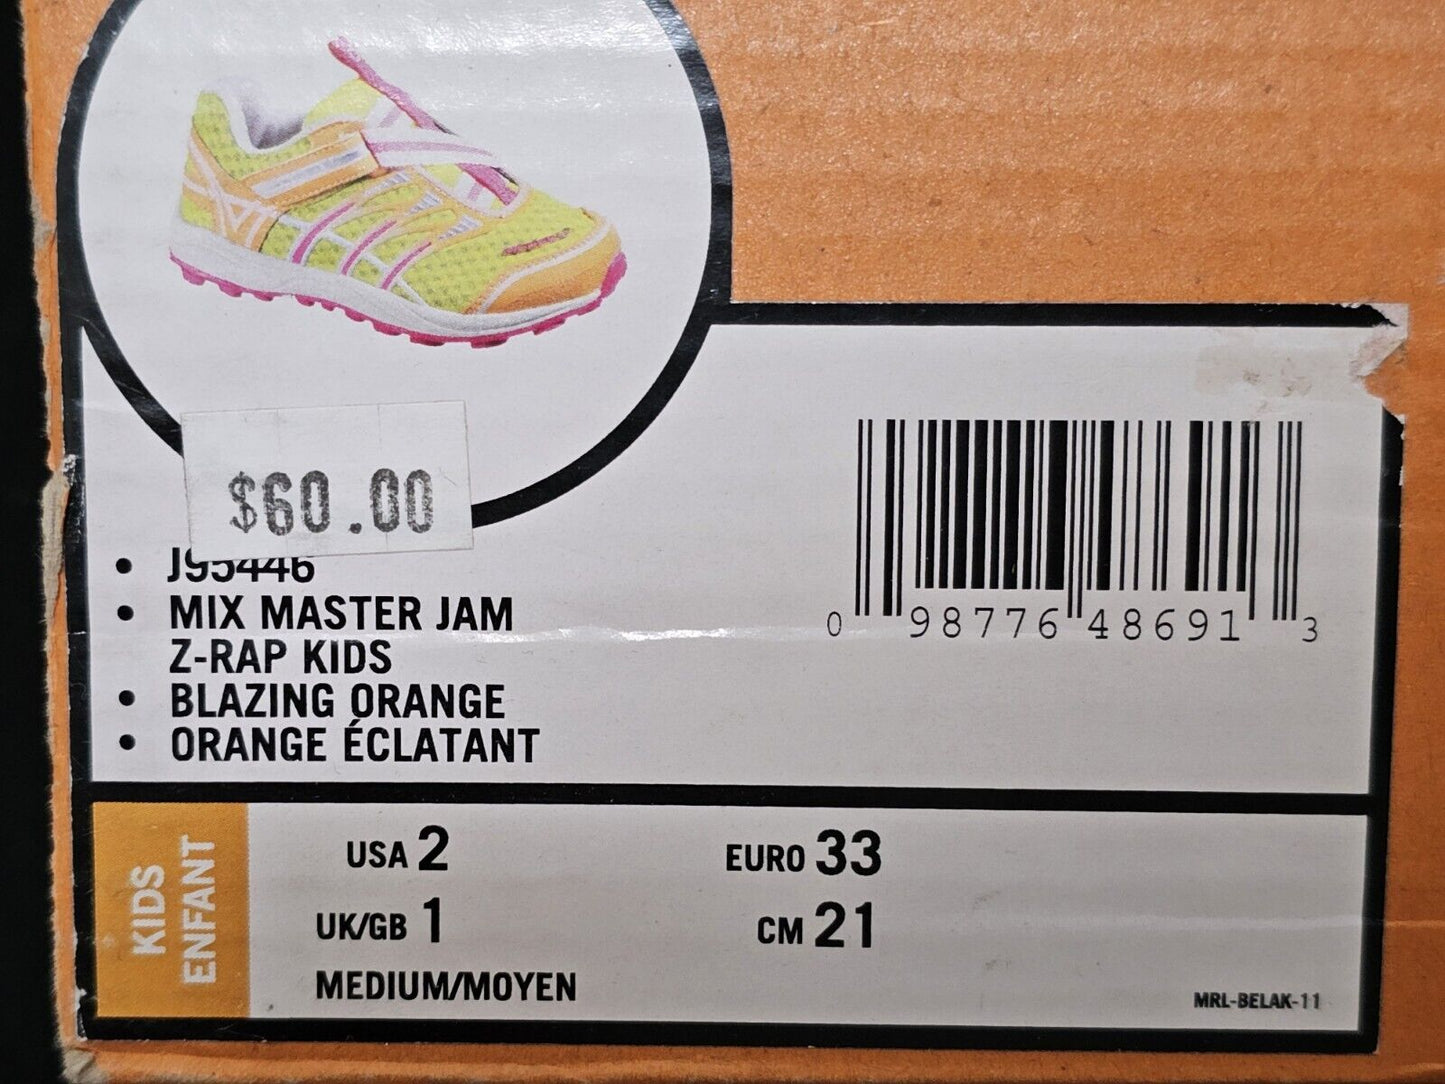 Merrell Mix Master Jam Z-Rap Running Shoe Blazing Orange Kids Size US 2